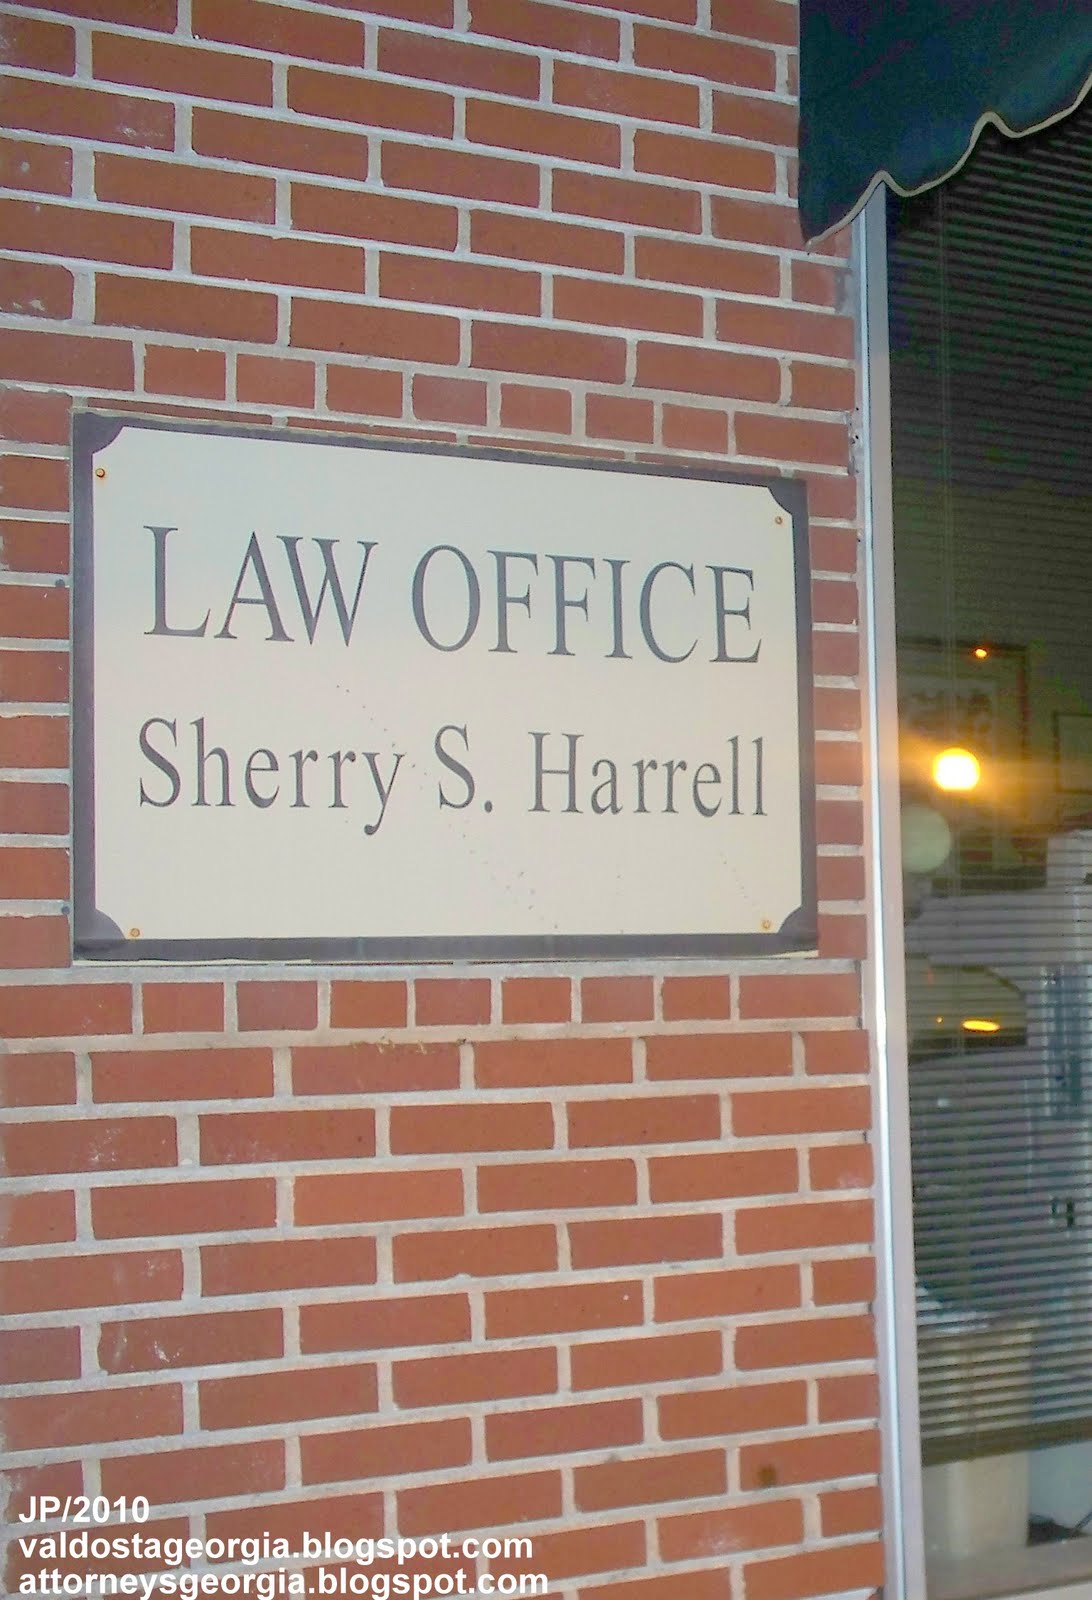 http://3.bp.blogspot.com/_OLc2TjnHOgQ/TBlV_het0tI/AAAAAAABESY/rnpAR93VLyE/s1600/SHERRY+S.+HARRELL+VALDOSTA+GA.+LAW+OFFICE,+Attorney+Lawyer+Sherry+S.+Harrell,+Valdosta+Georgia.JPG